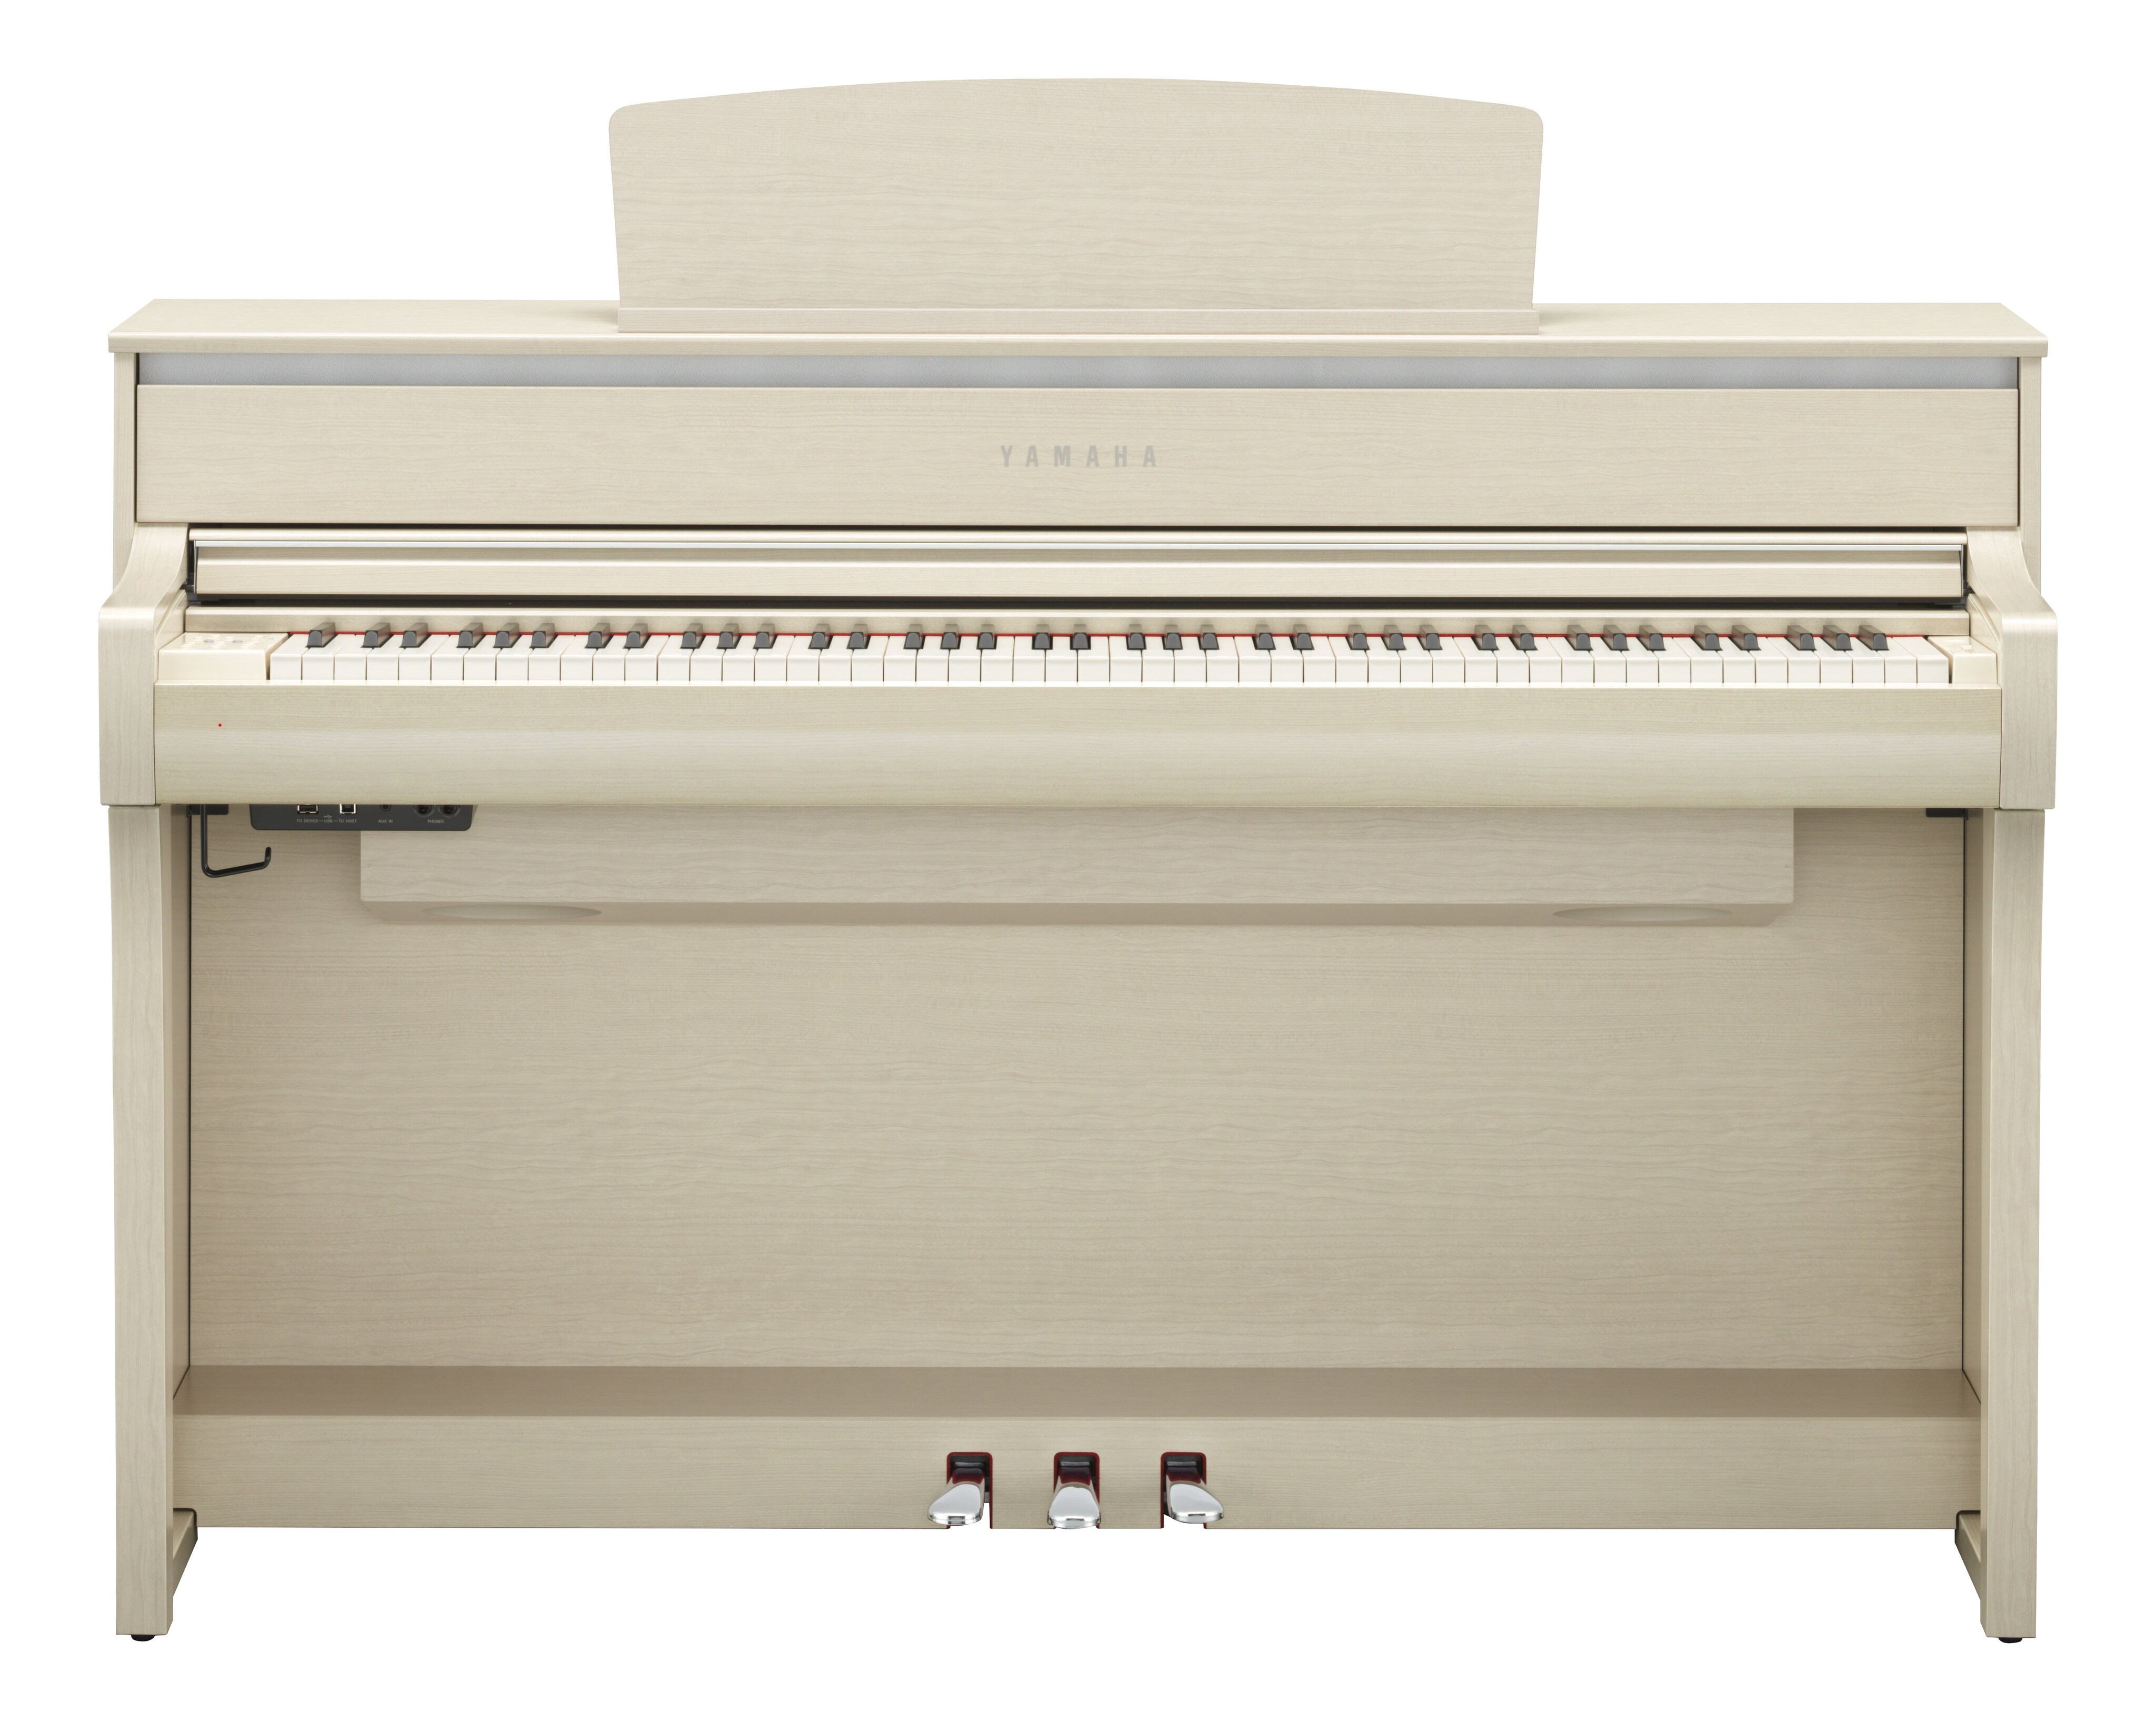 CLP-675 - Overview - Clavinova - Pianos - Musical Instruments 